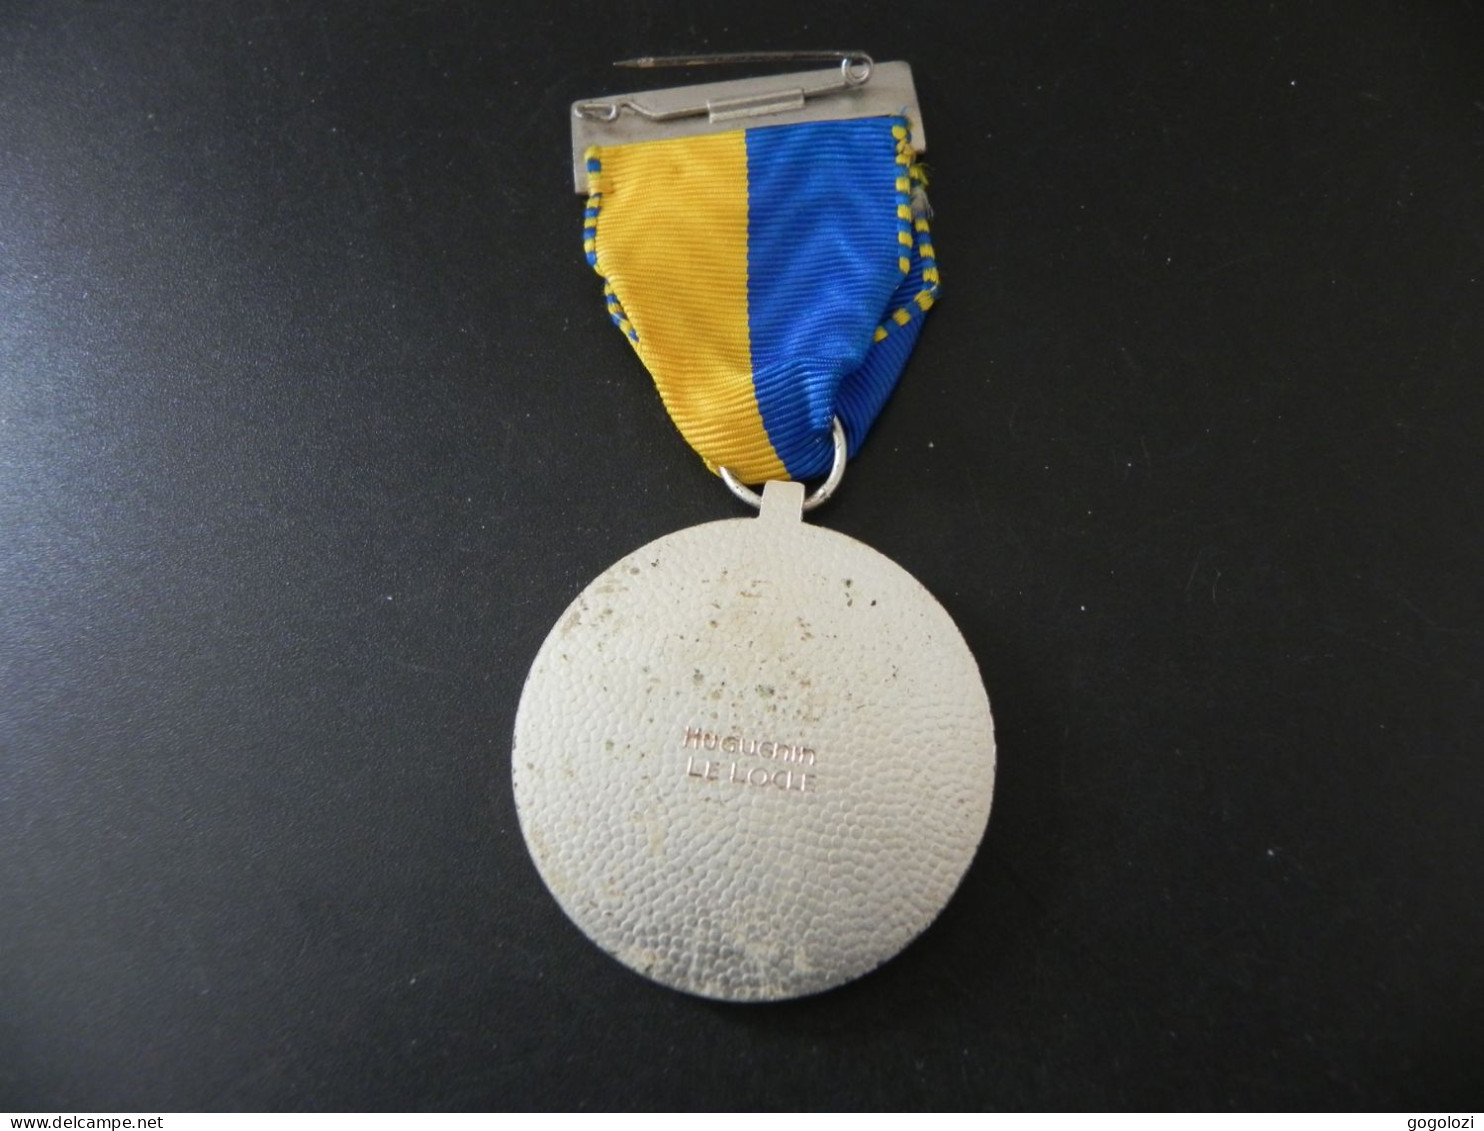 Shooting Medal - Medaille Schweiz Suisse Switzerland - Jubiläumsschiessen Worben 1961 - Non Classés